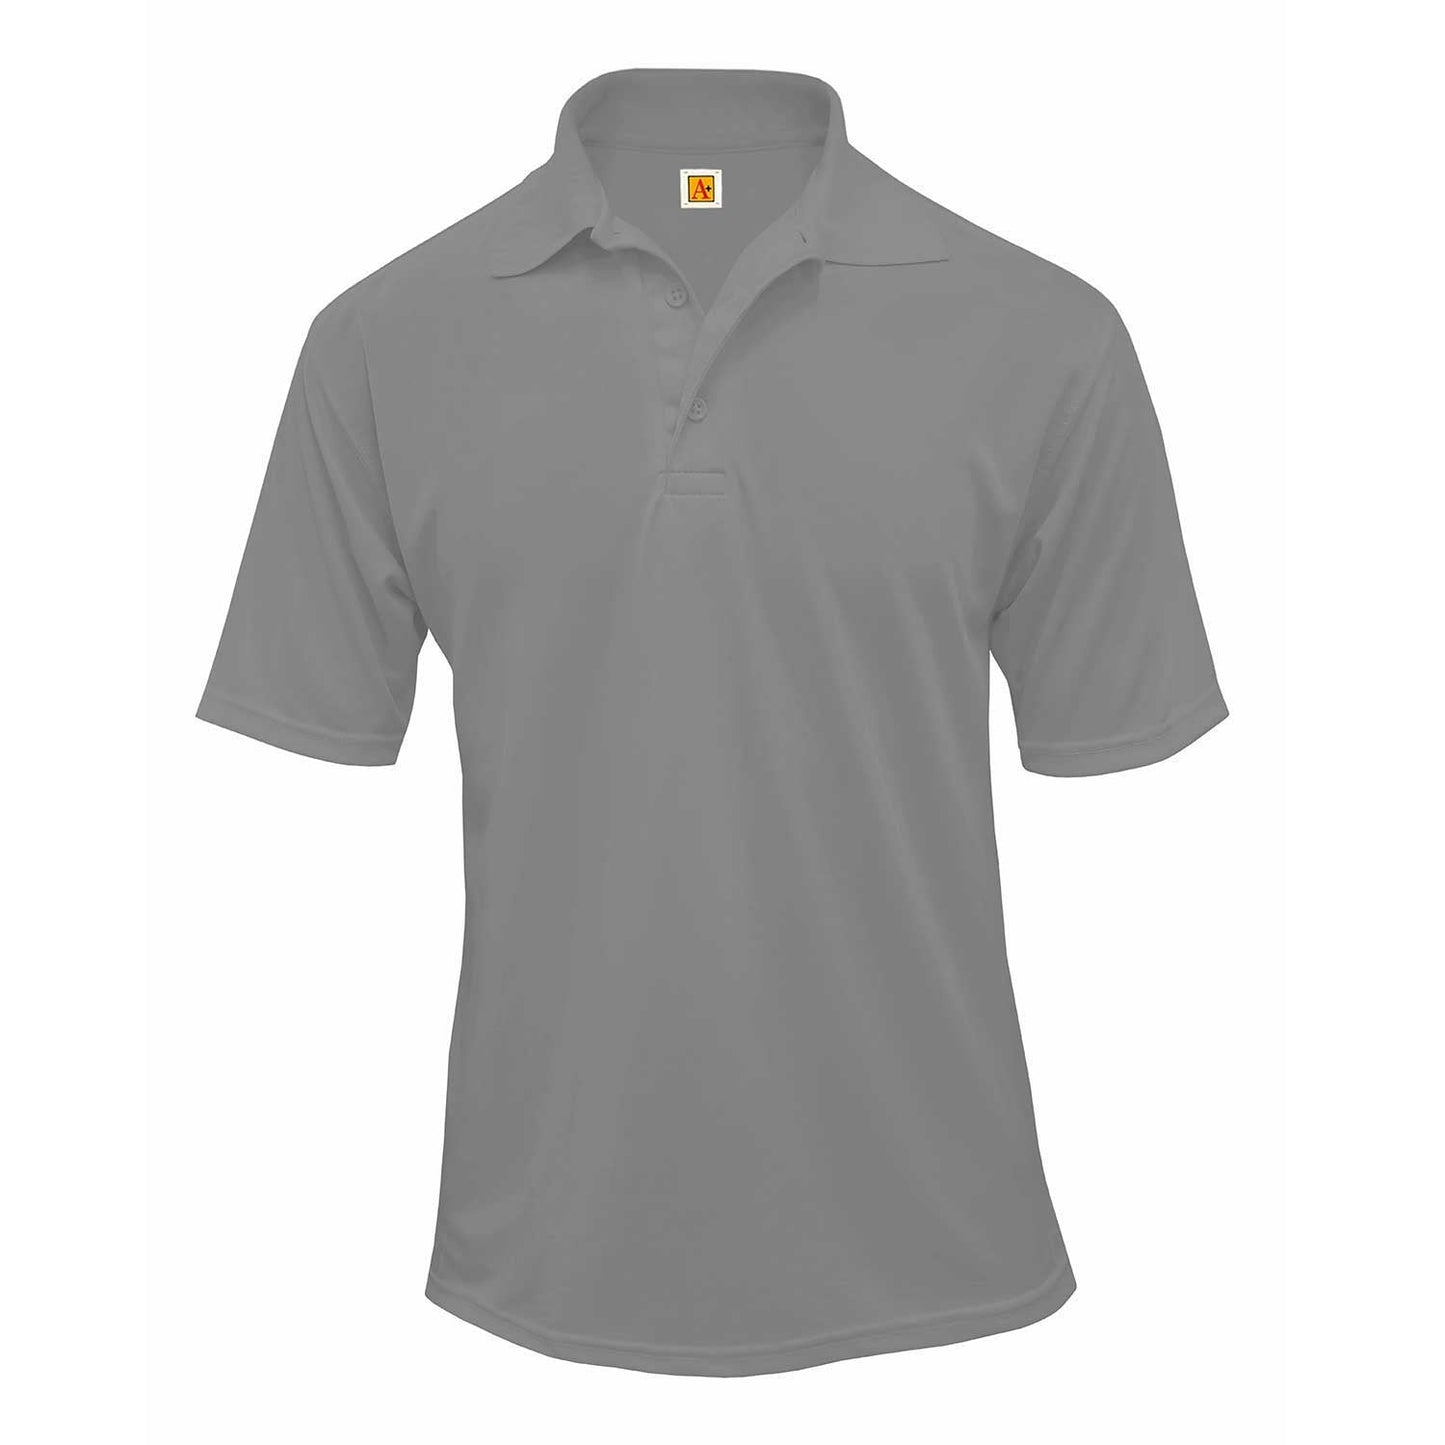 Performance Dri-fit Jersey Knit Short Sleeve Shirt (Unisex) w/Logo - 1109